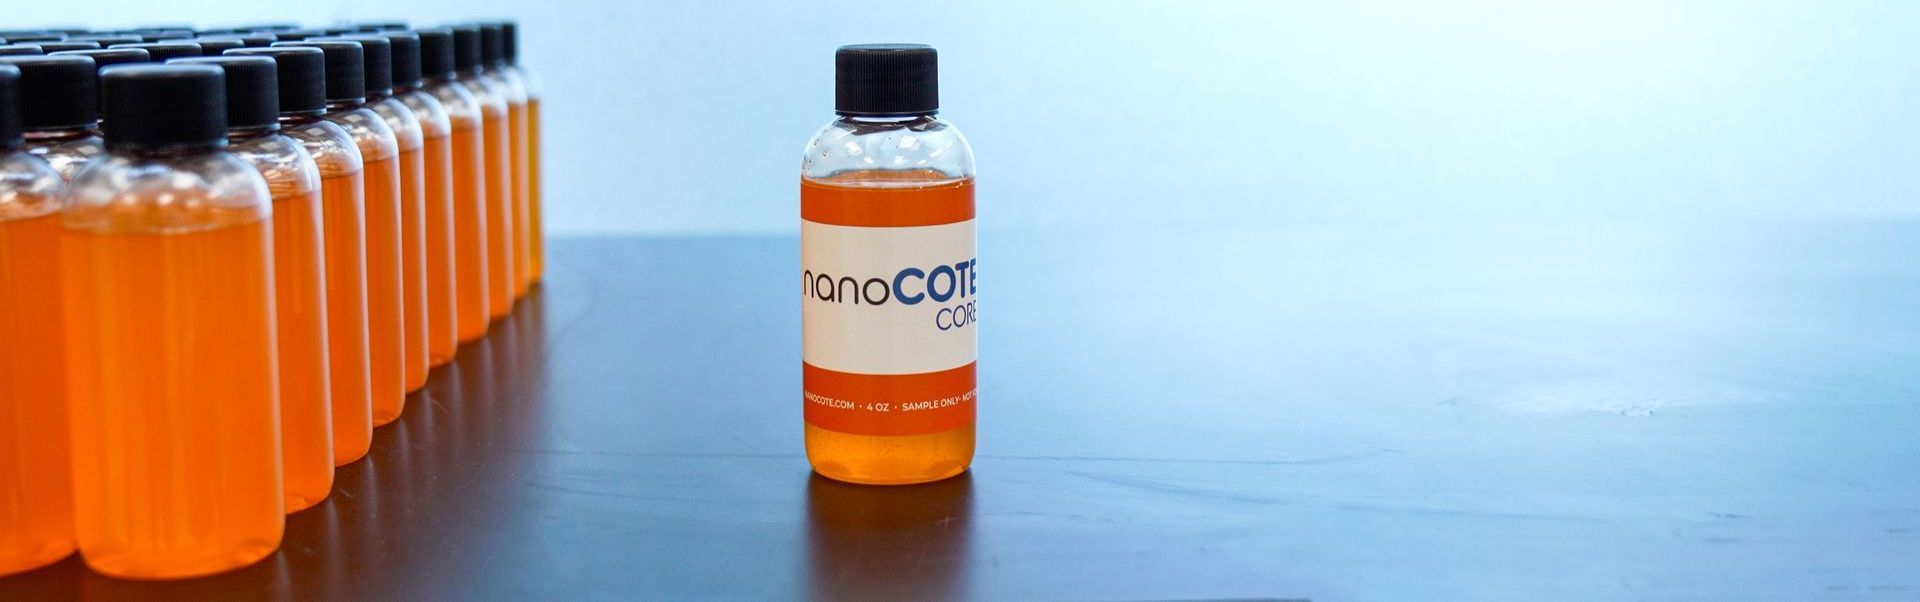 Bottles of NanoCote Core 